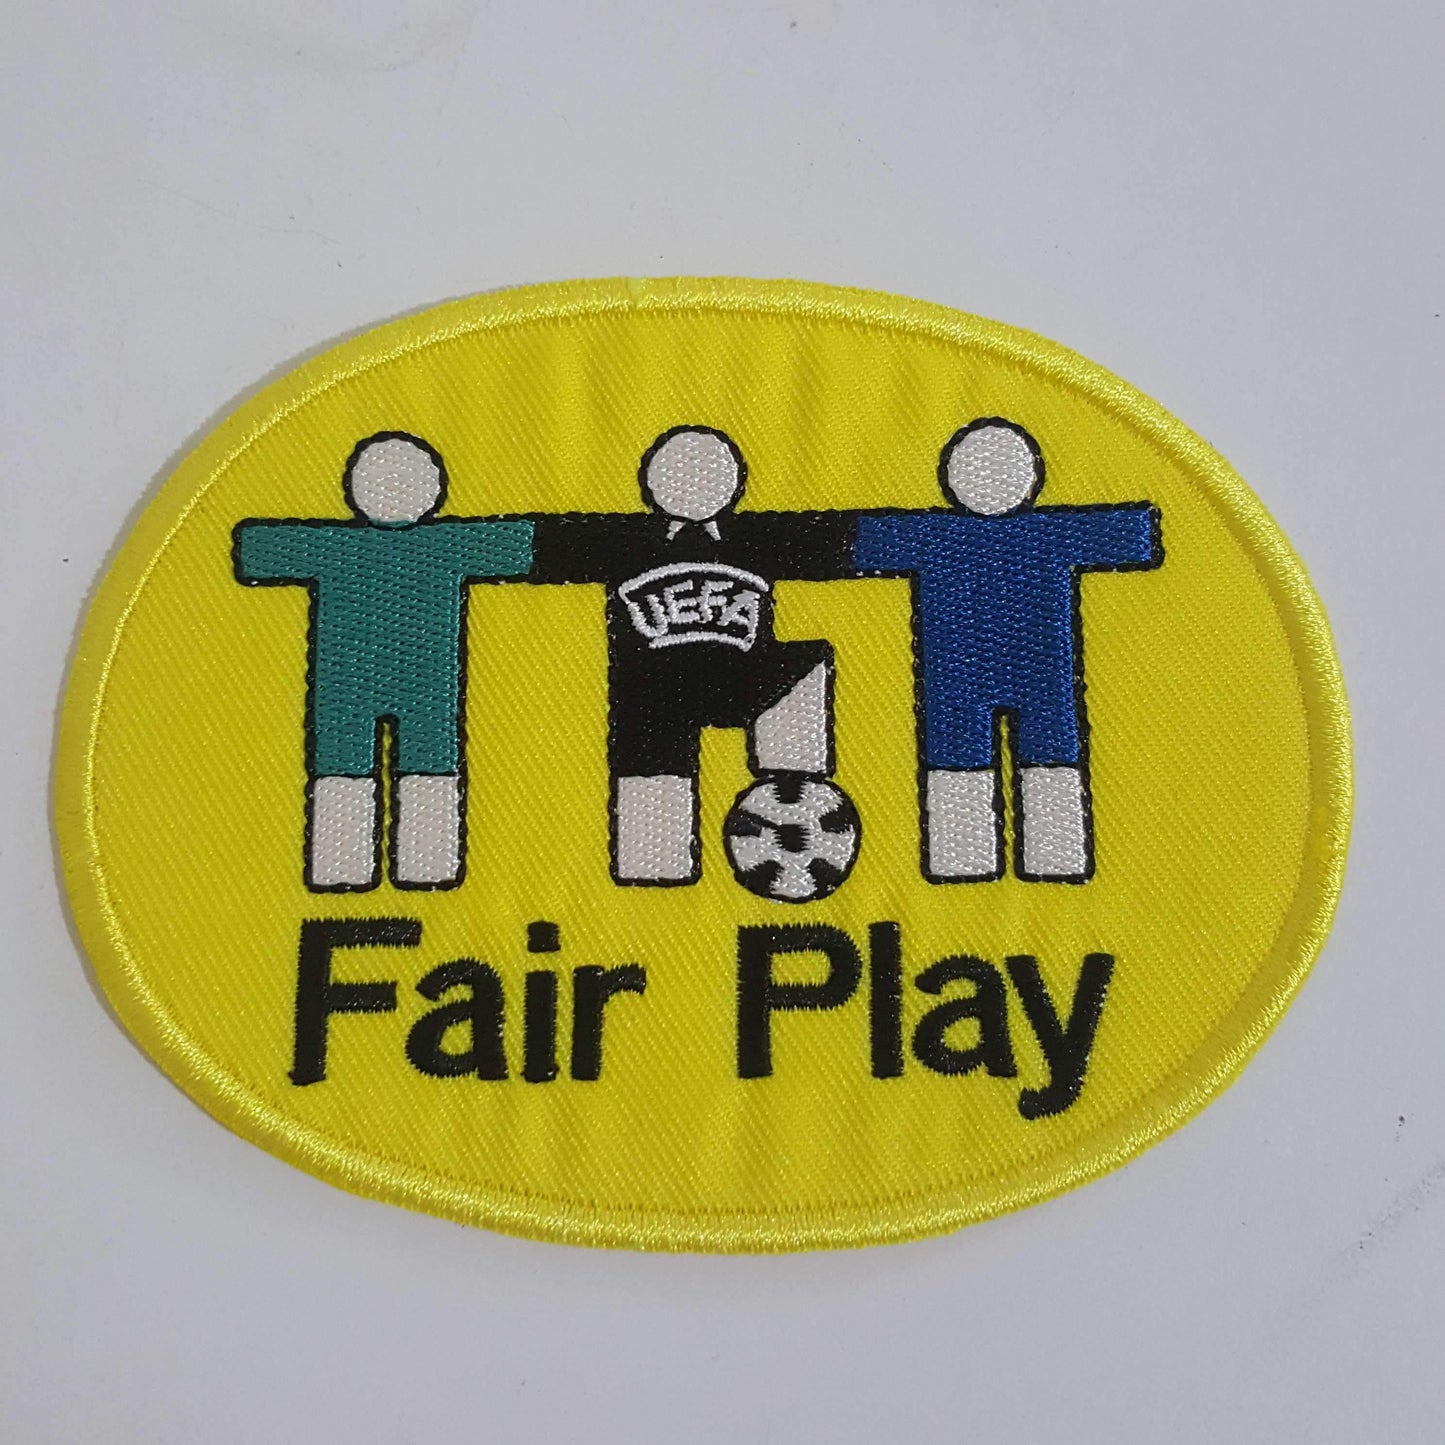 UEFA Fairplay Patch - ClassicFootballJersey